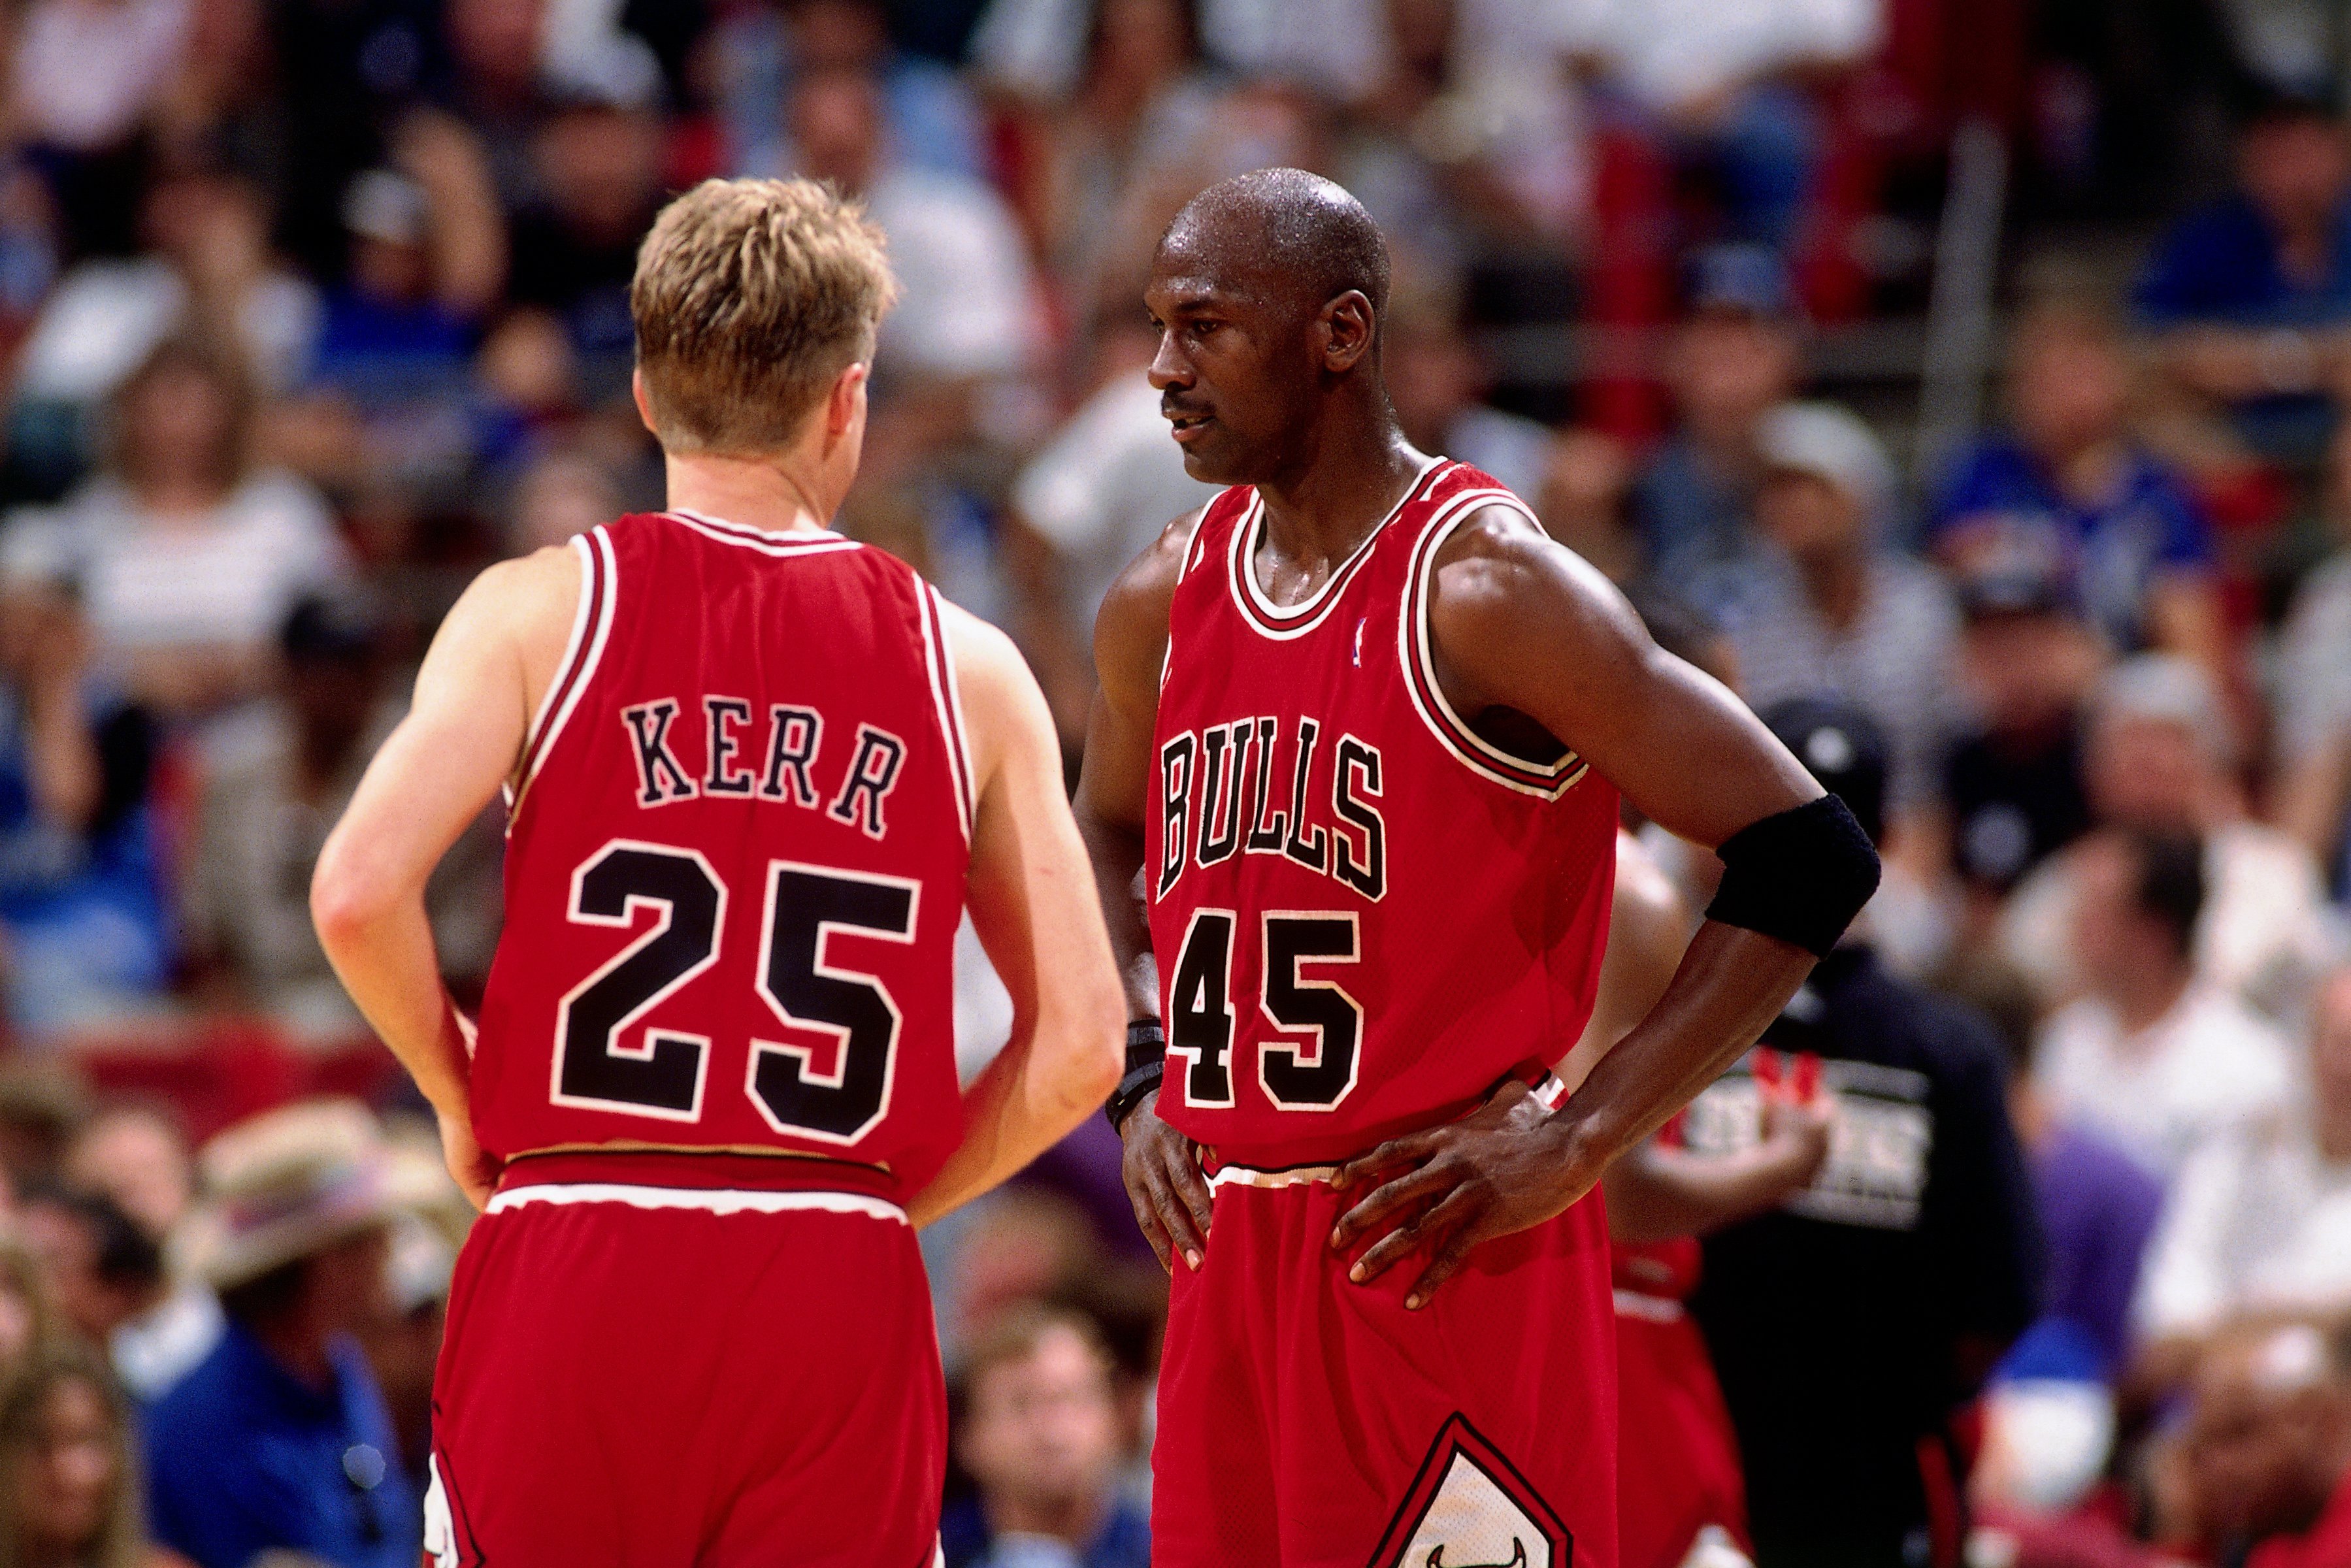 High Quality】Men's New Original NBA Chicago Bulls #25 Steve Kerr